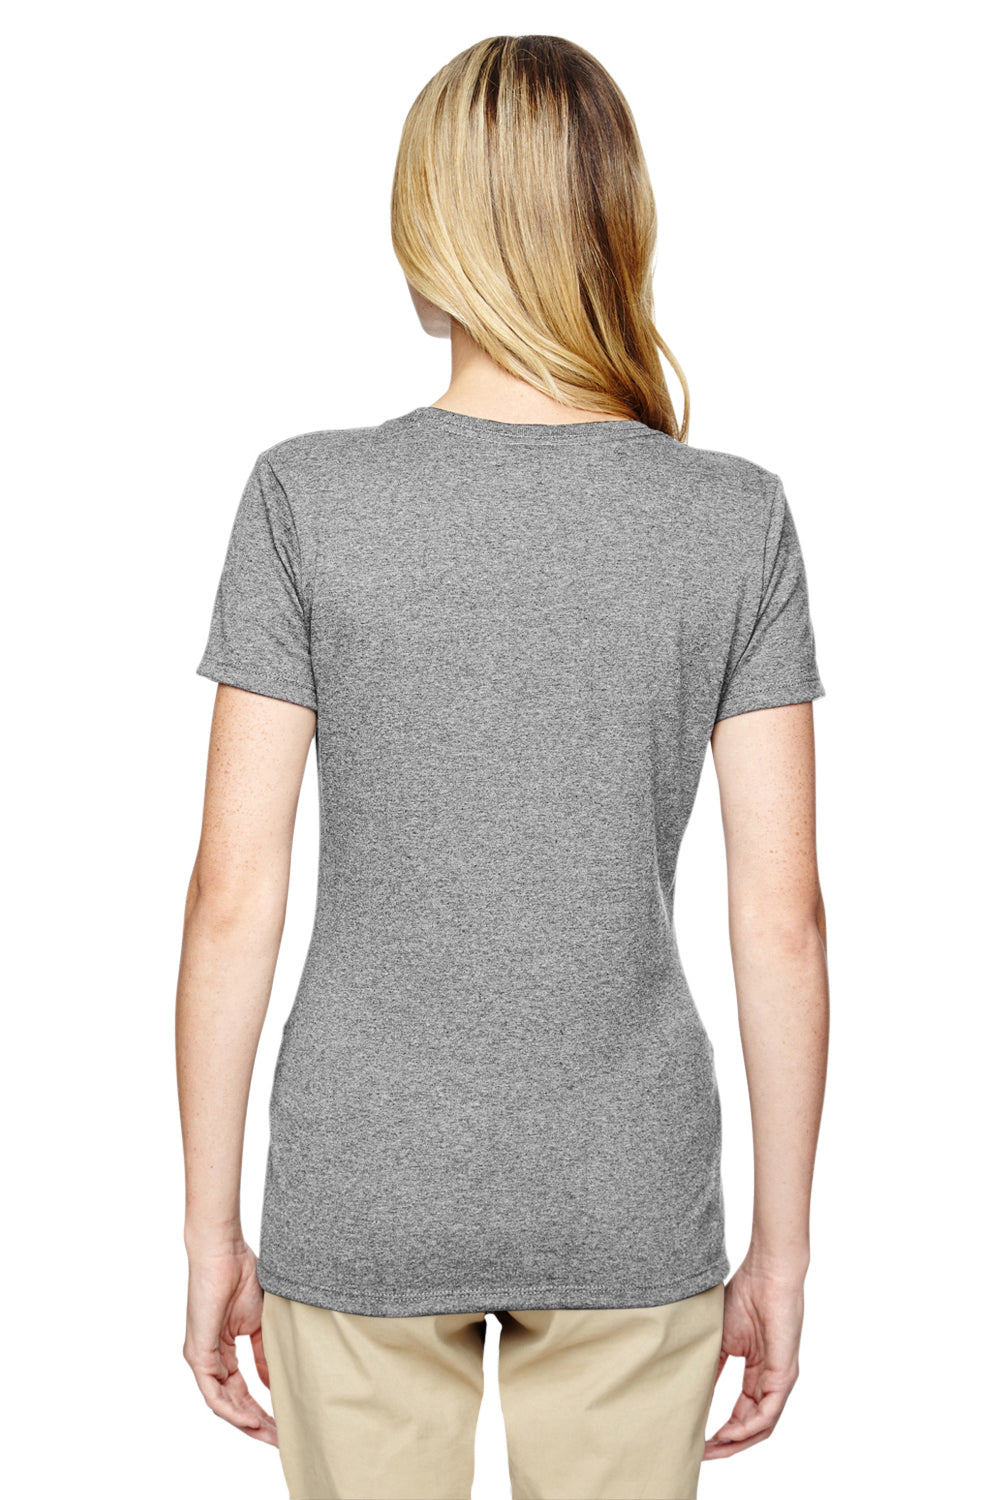 Jerzees 29WR Womens Dri-Power Moisture Wicking Short Sleeve Crewneck T-Shirt Heather Grey Back